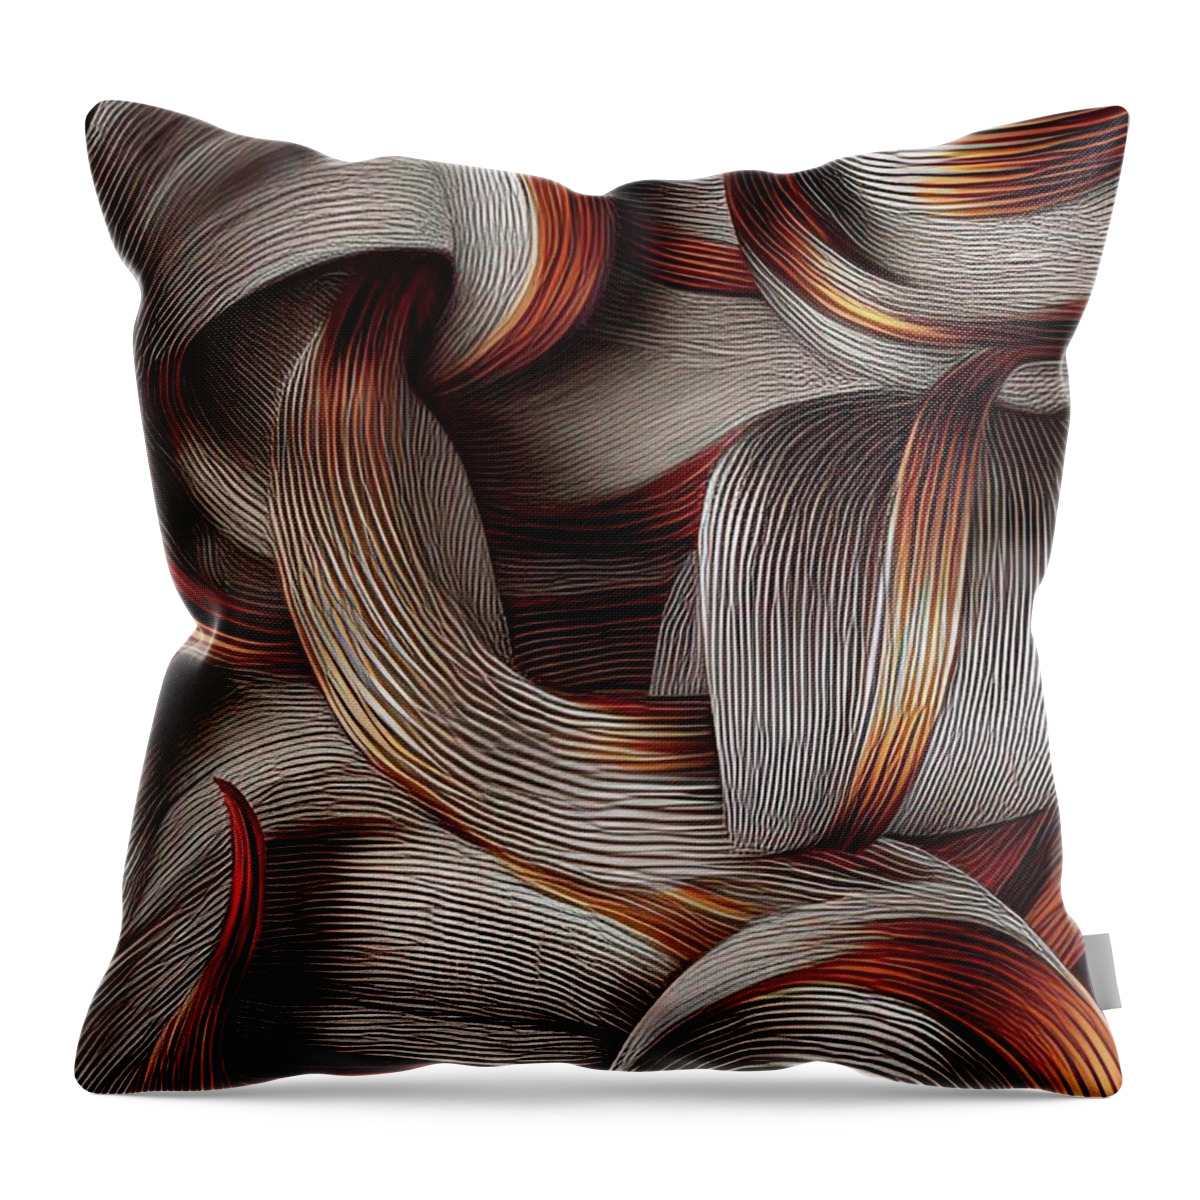 3d Art Throw Pillow featuring the digital art Connections - copper, topaz, maroon, brown, ochre 3d line art by Bonnie Bruno